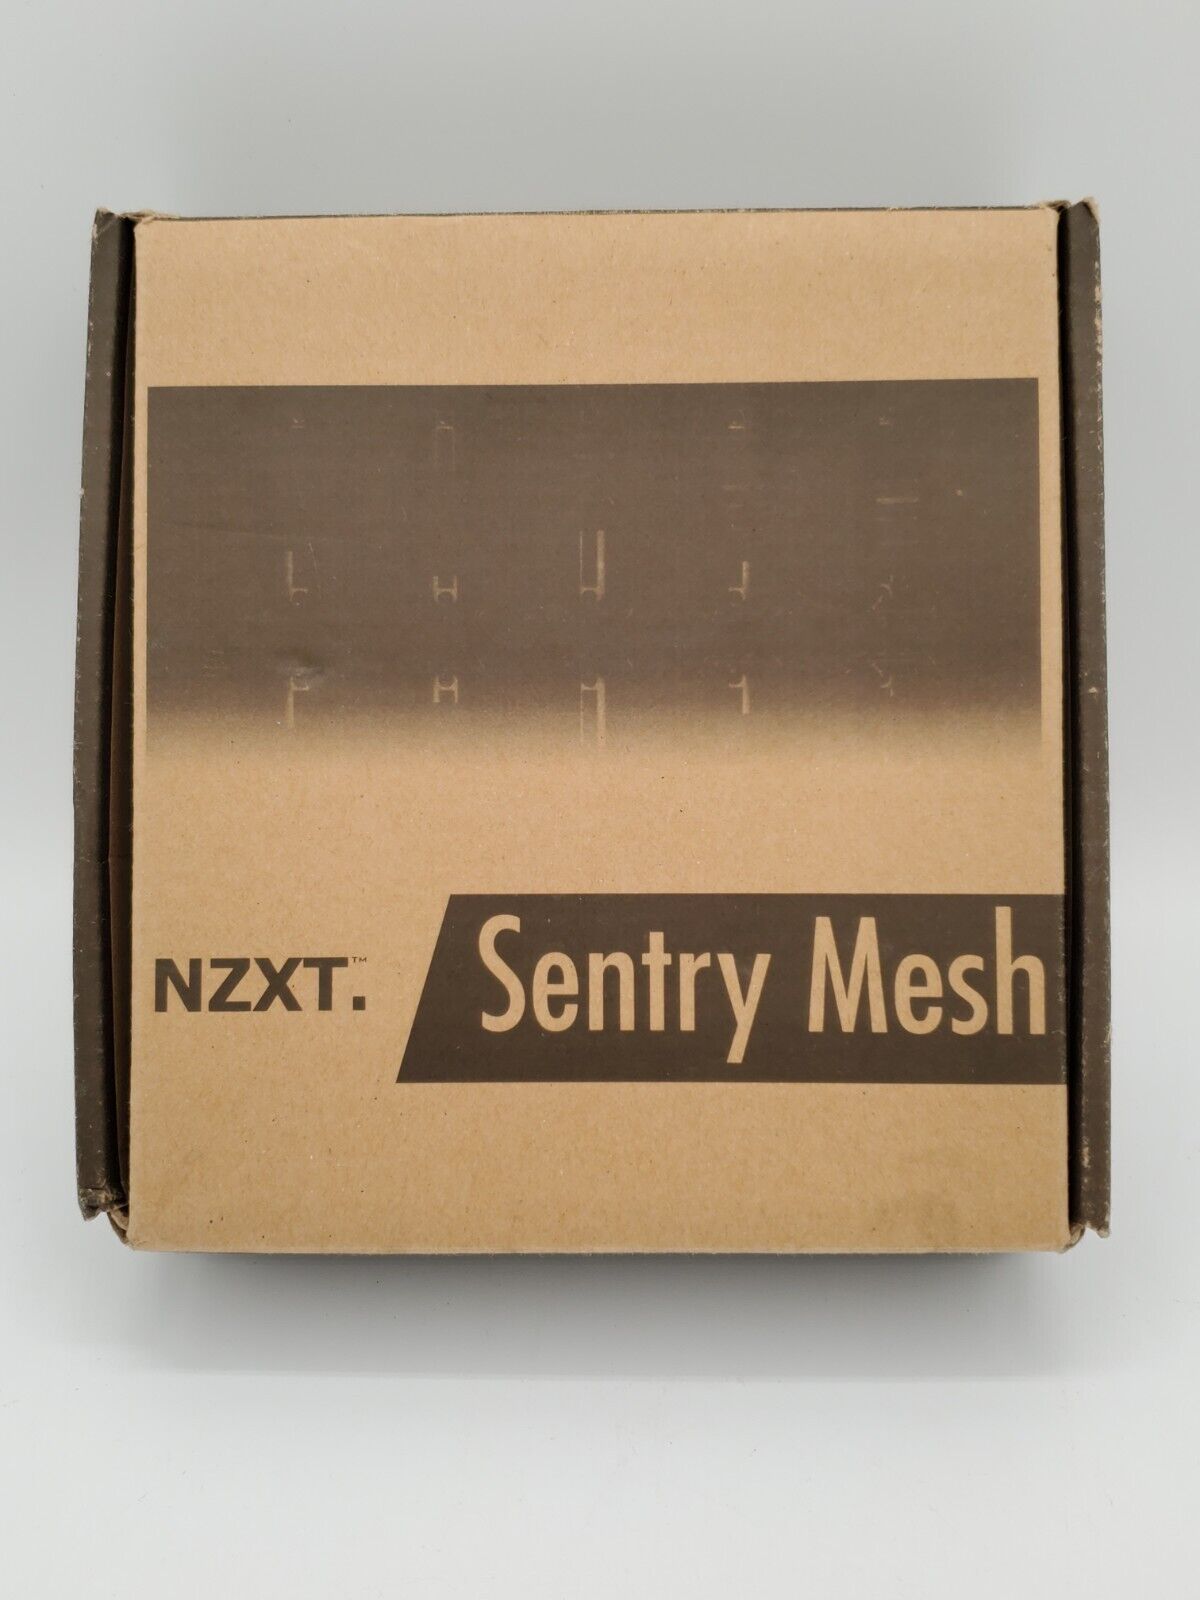 NZXT Sentry Mesh 5.25